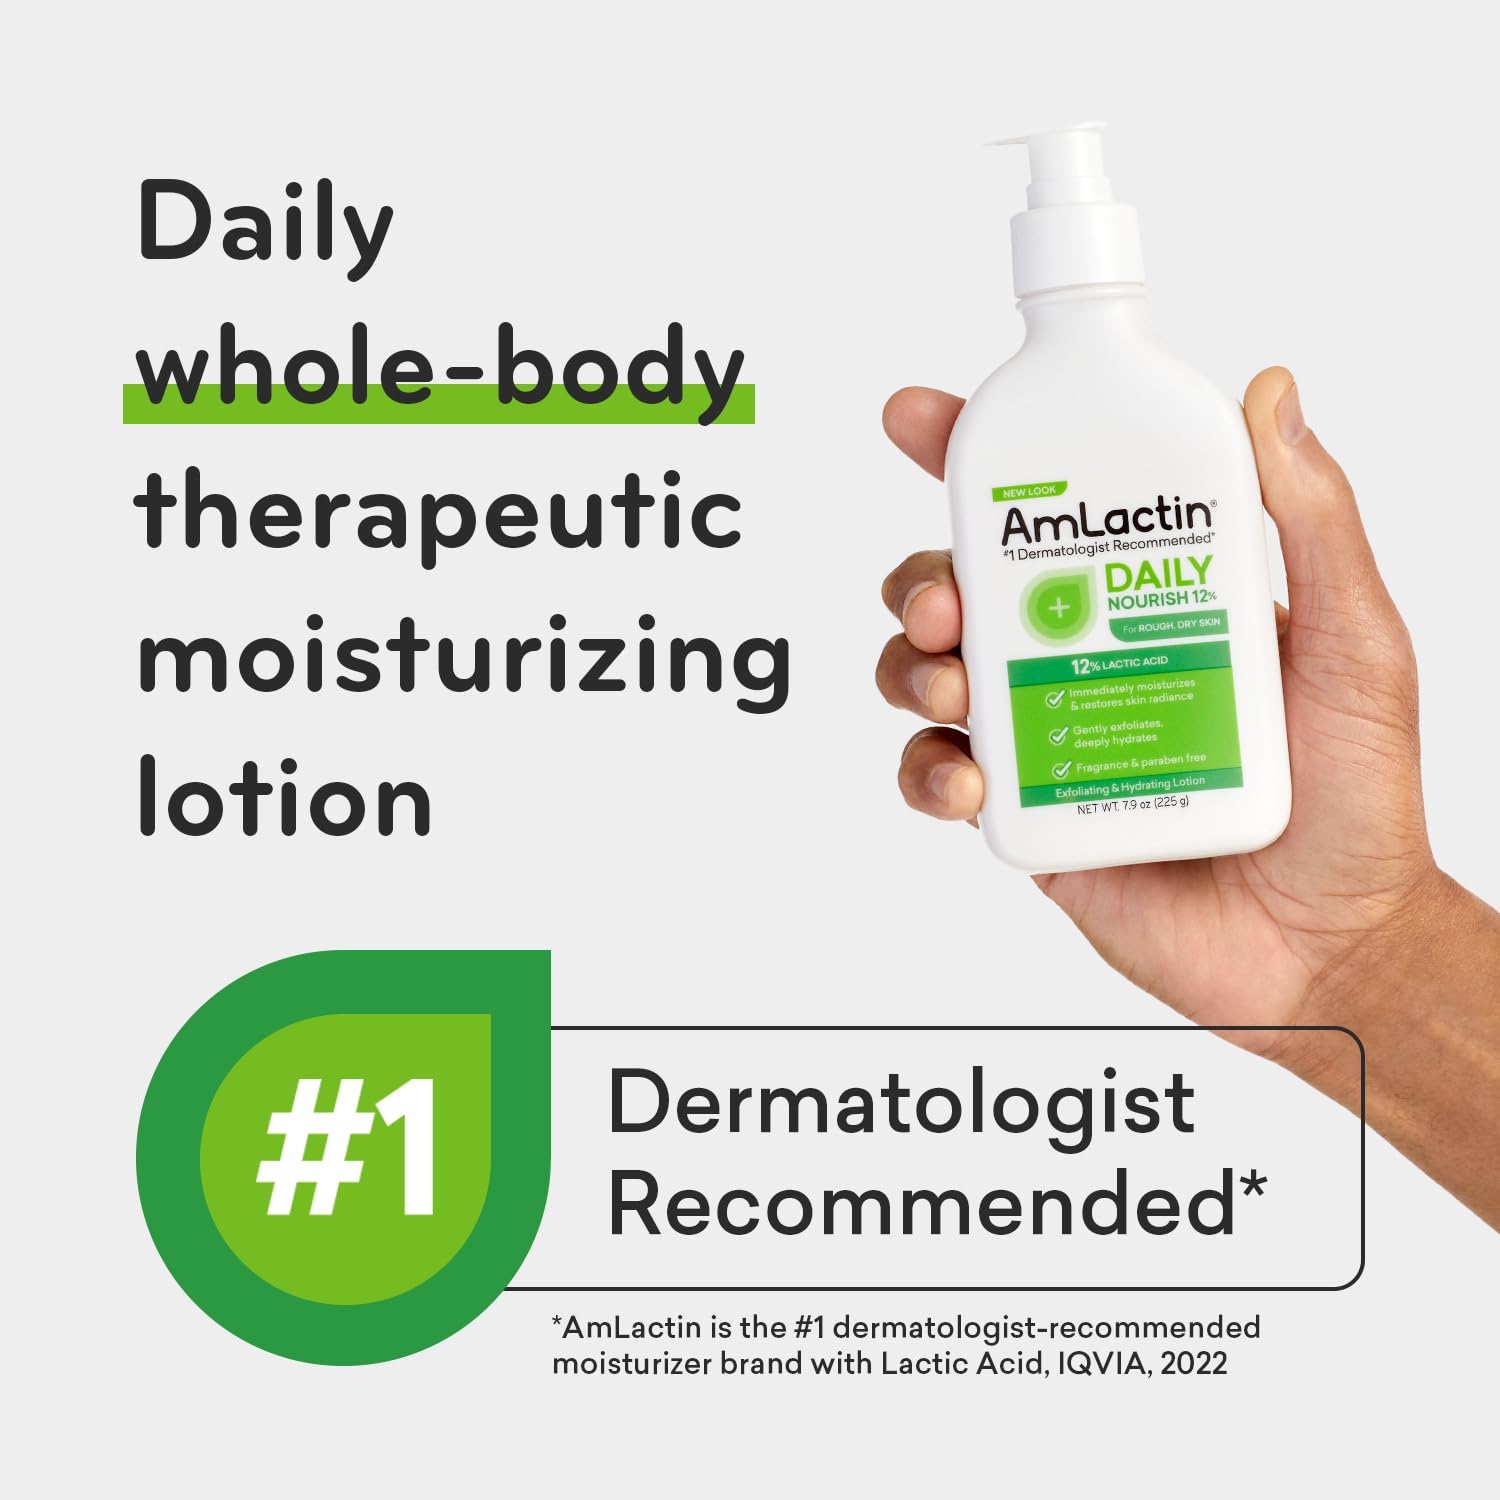 AmLactin Ultra Smoothing - 4.9 oz Body & Hand Cream with 15% Lactic Acid - Exfoliator and Moisturizer & Daily Nourish 12% - 14.1 oz Body Lotion with 12% Lactic Acid - Exfoliator and Moisturizer